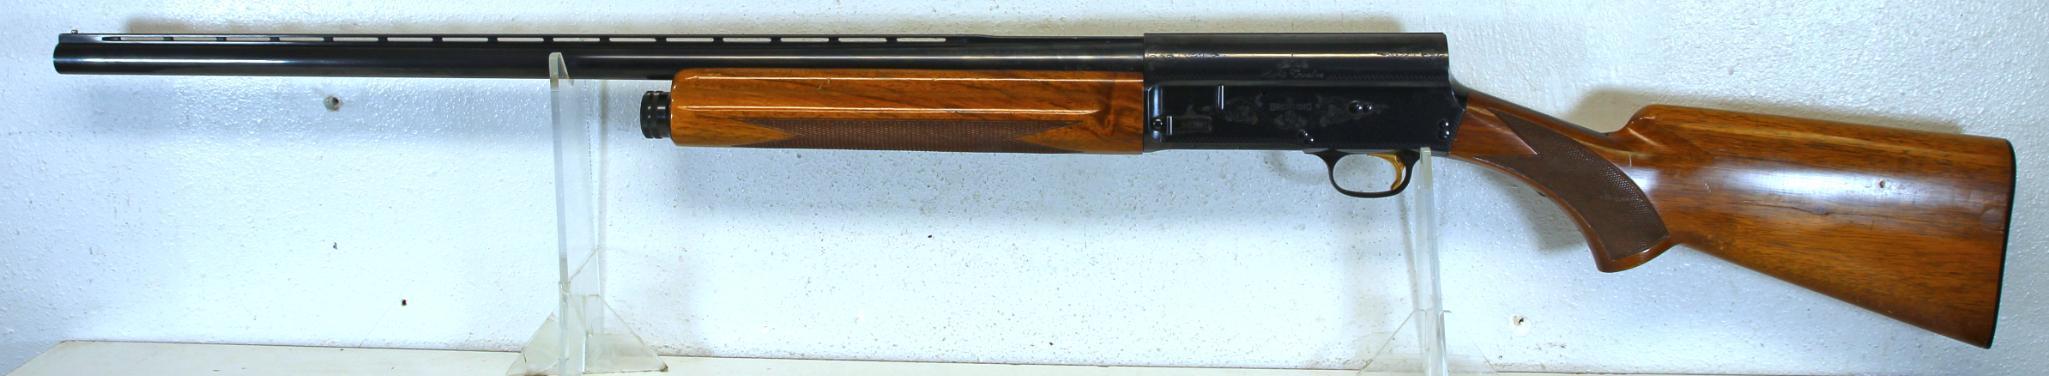 Belgium Browning A-5 Light Twelve 12 Ga. Semi-Auto Shotgun... 27 1/2" VR Barrel... 2 3/4" Chamber...